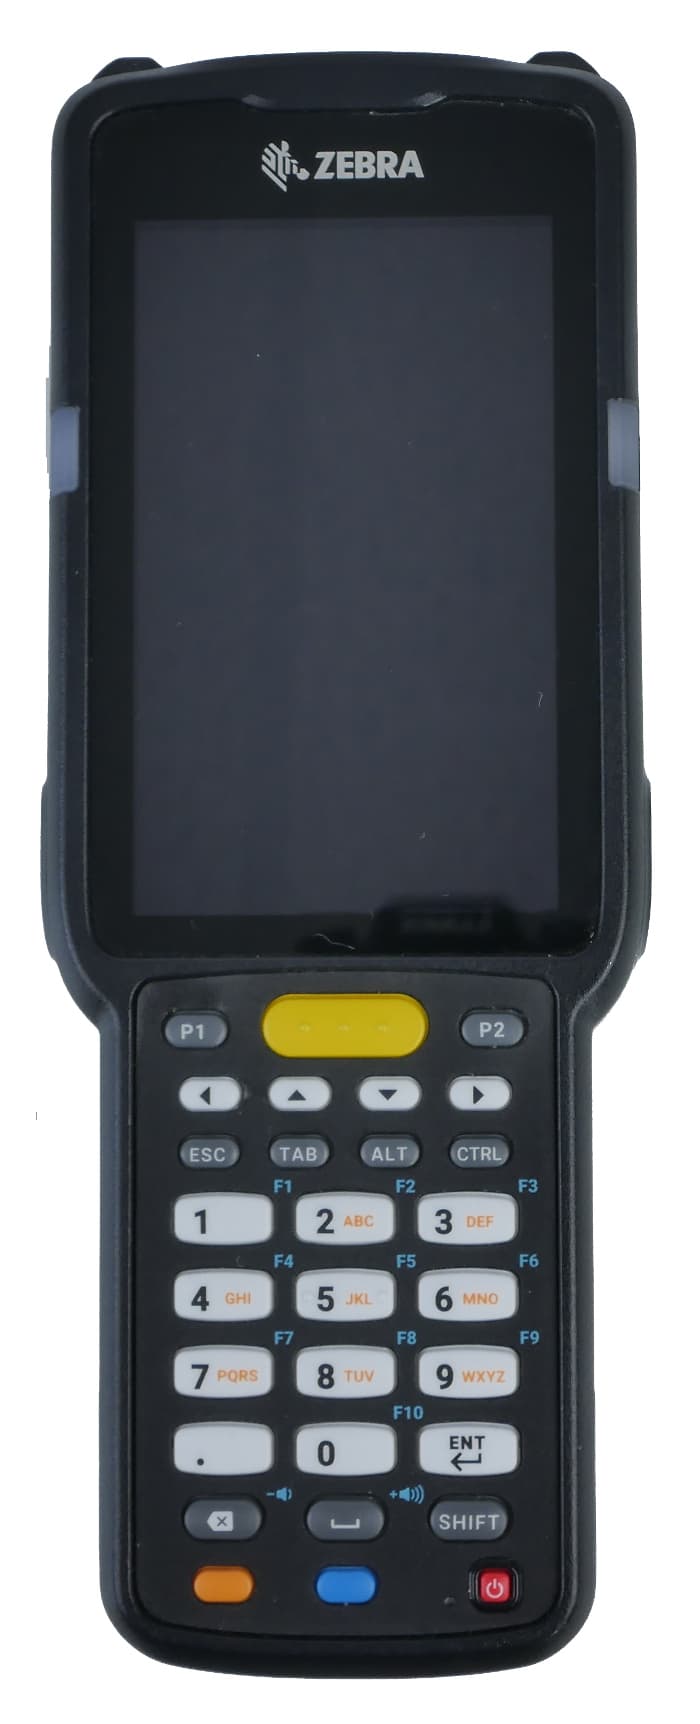 Zebra MC3300: Top Barcodescanner